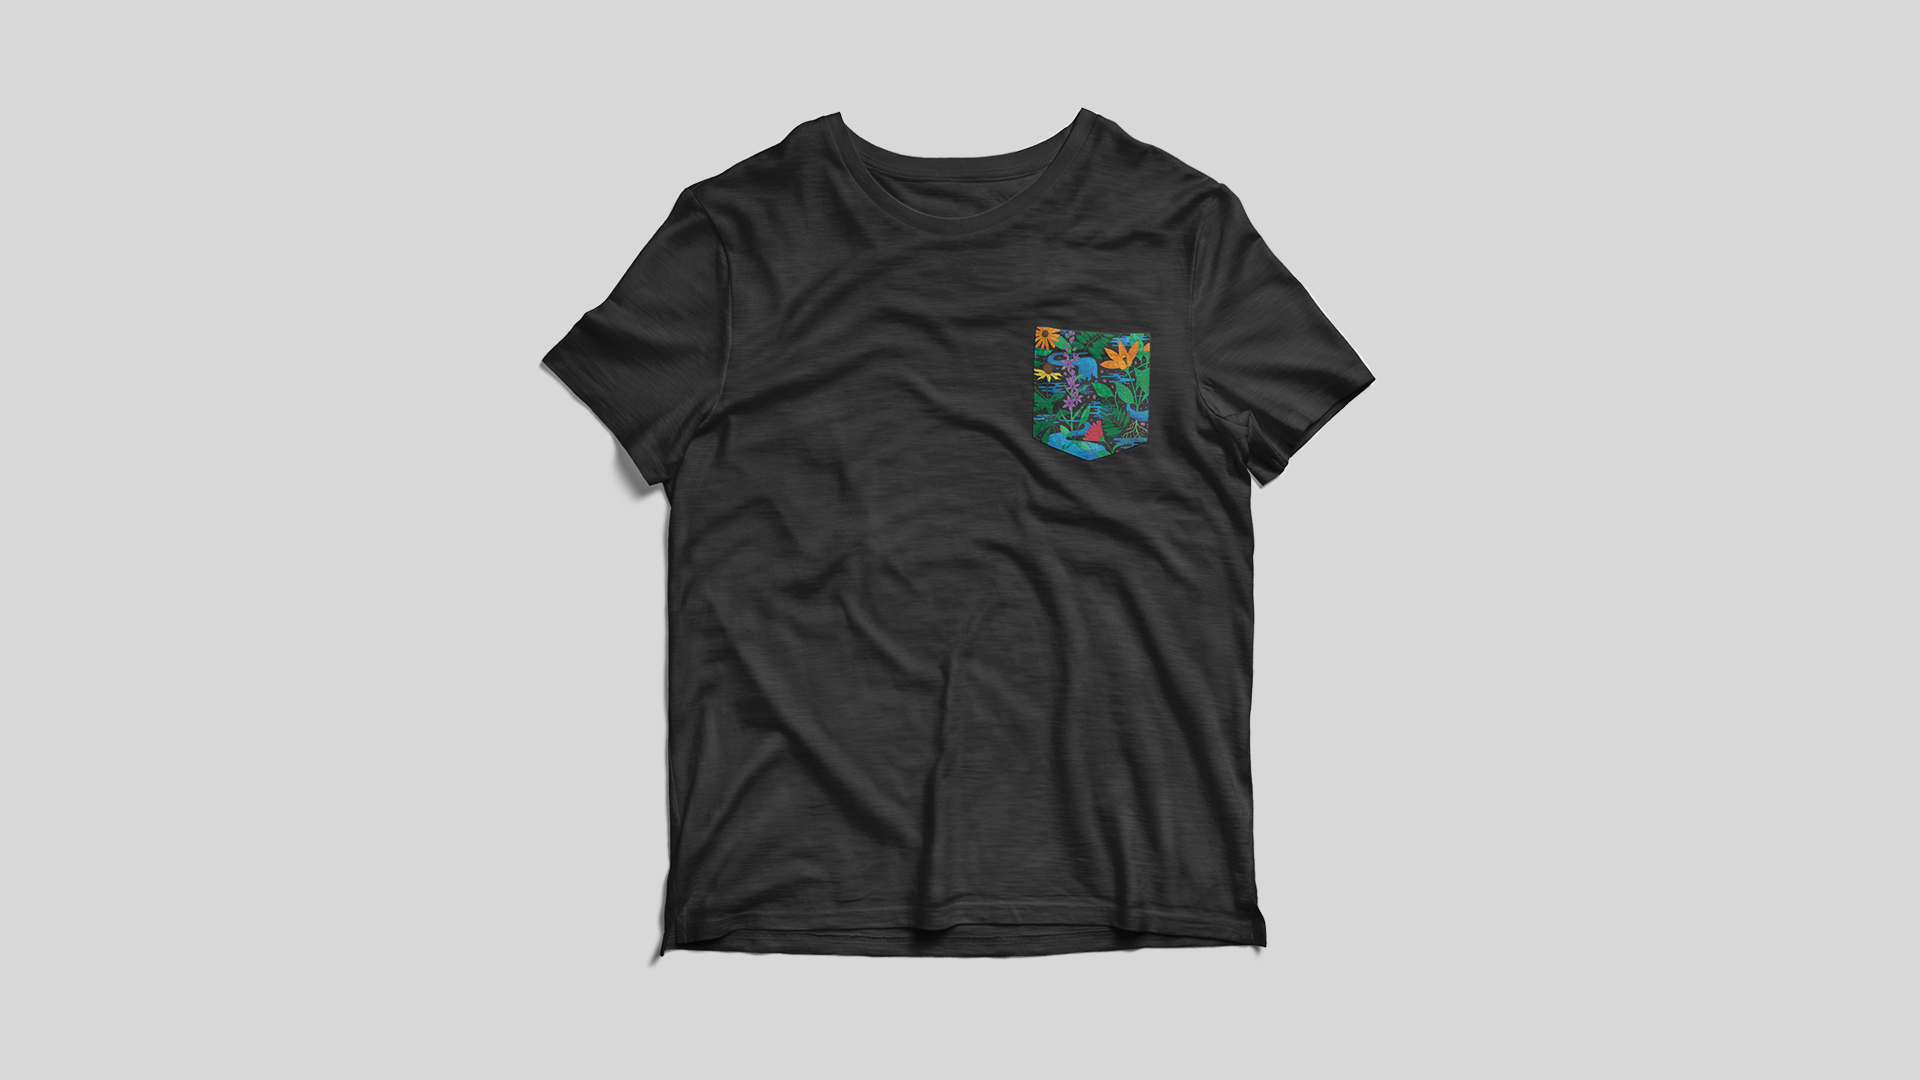 General Assembly Shirt Design